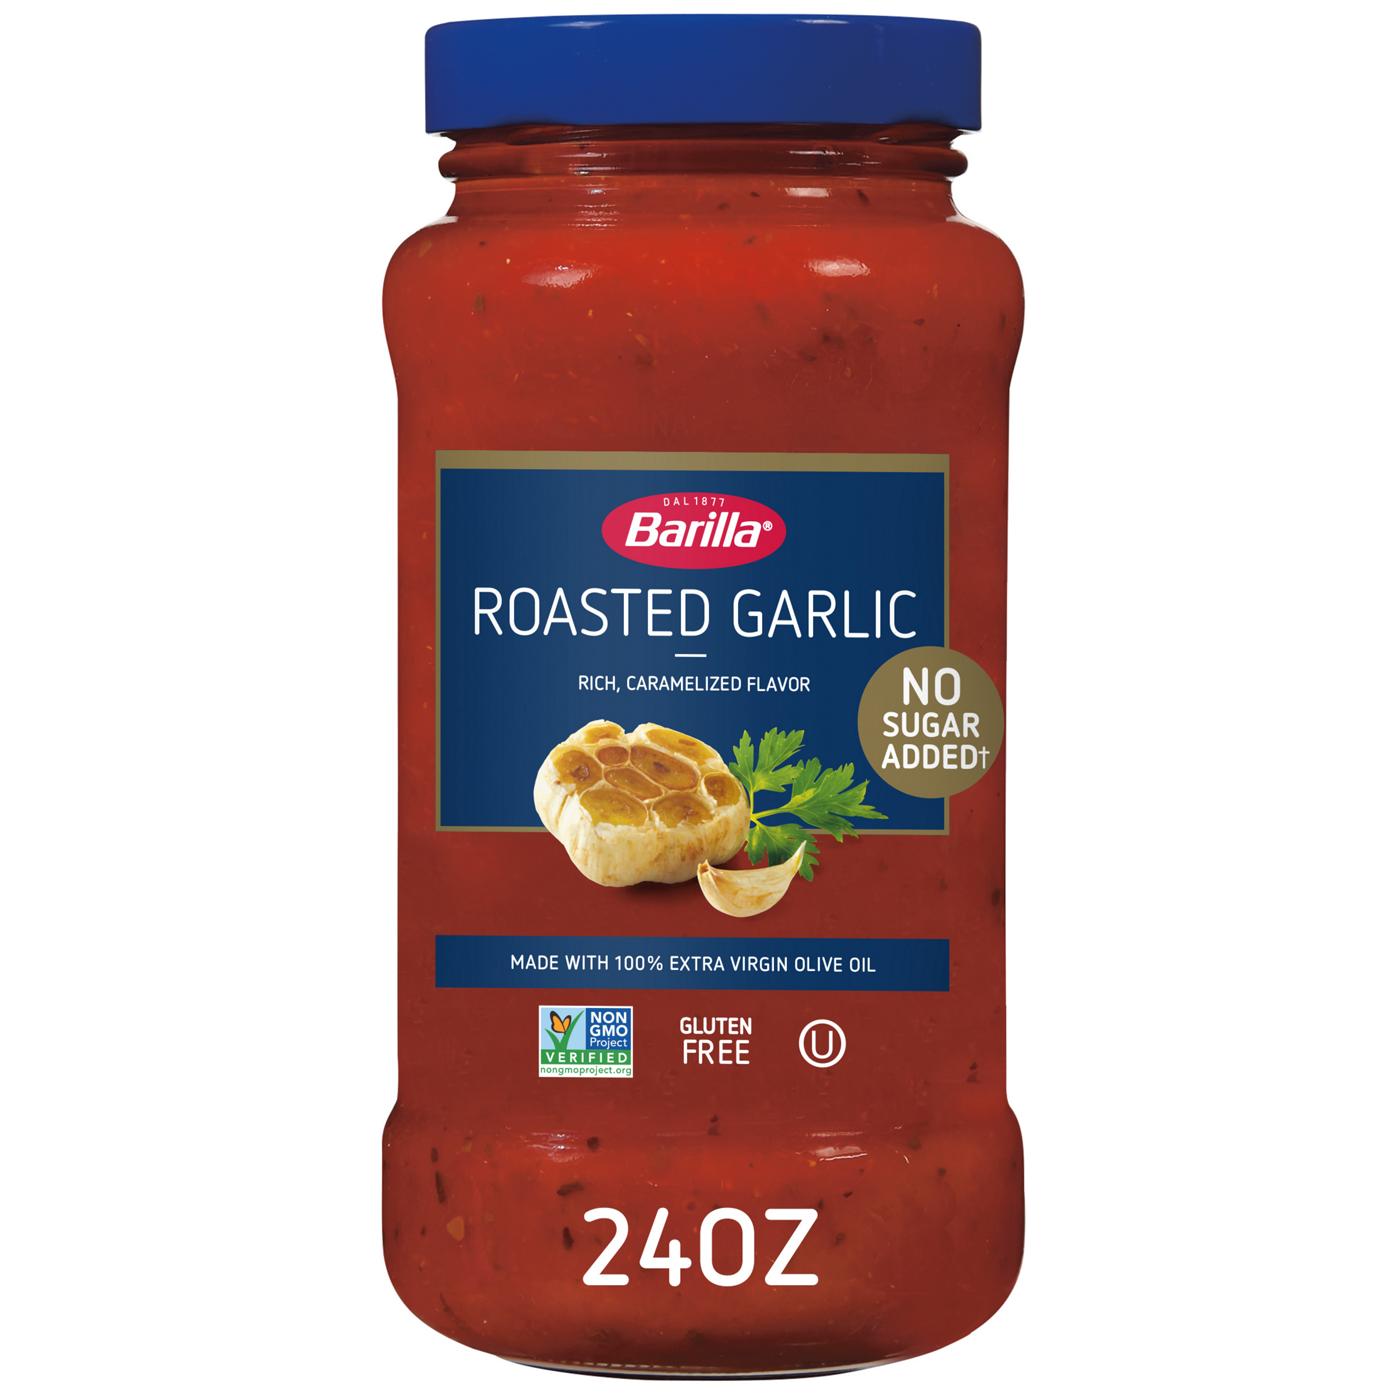 Barilla Roasted Garlic Pasta Sauce; image 1 of 6